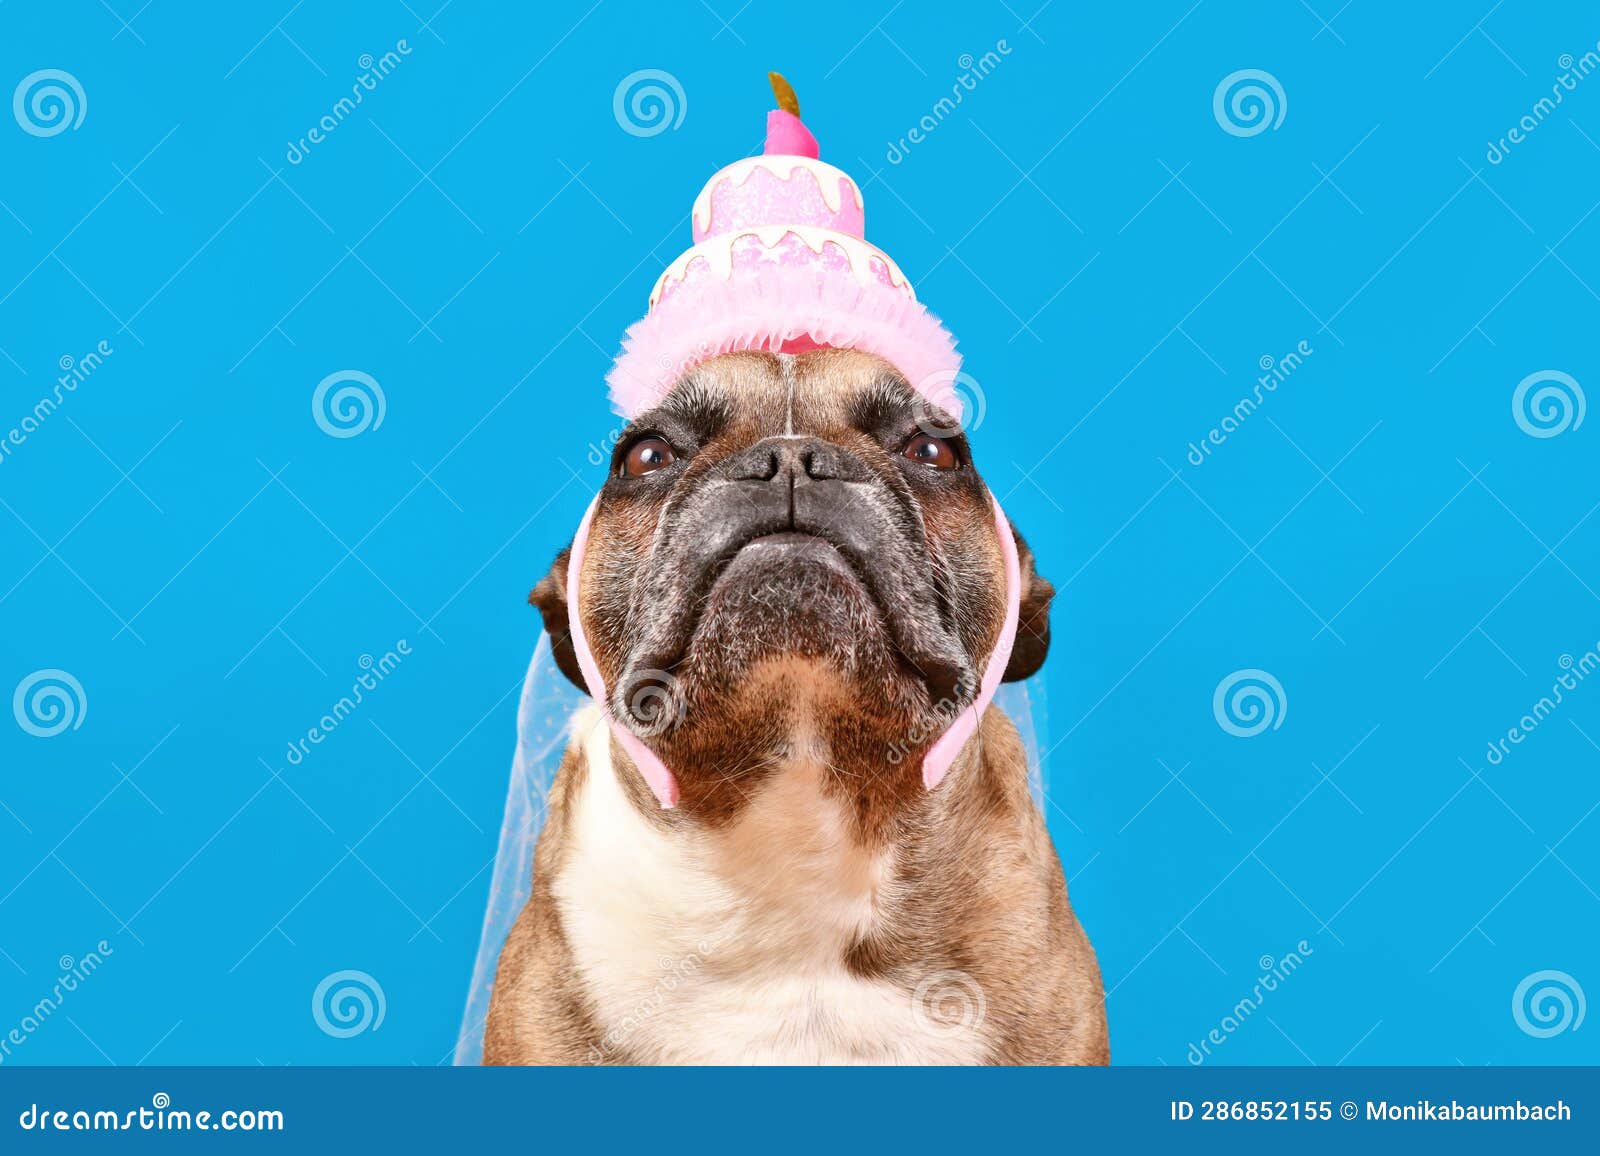 French Bulldog Dog with Birthday Party Cake Hat Stock Image - Image of  animal, french: 286852155